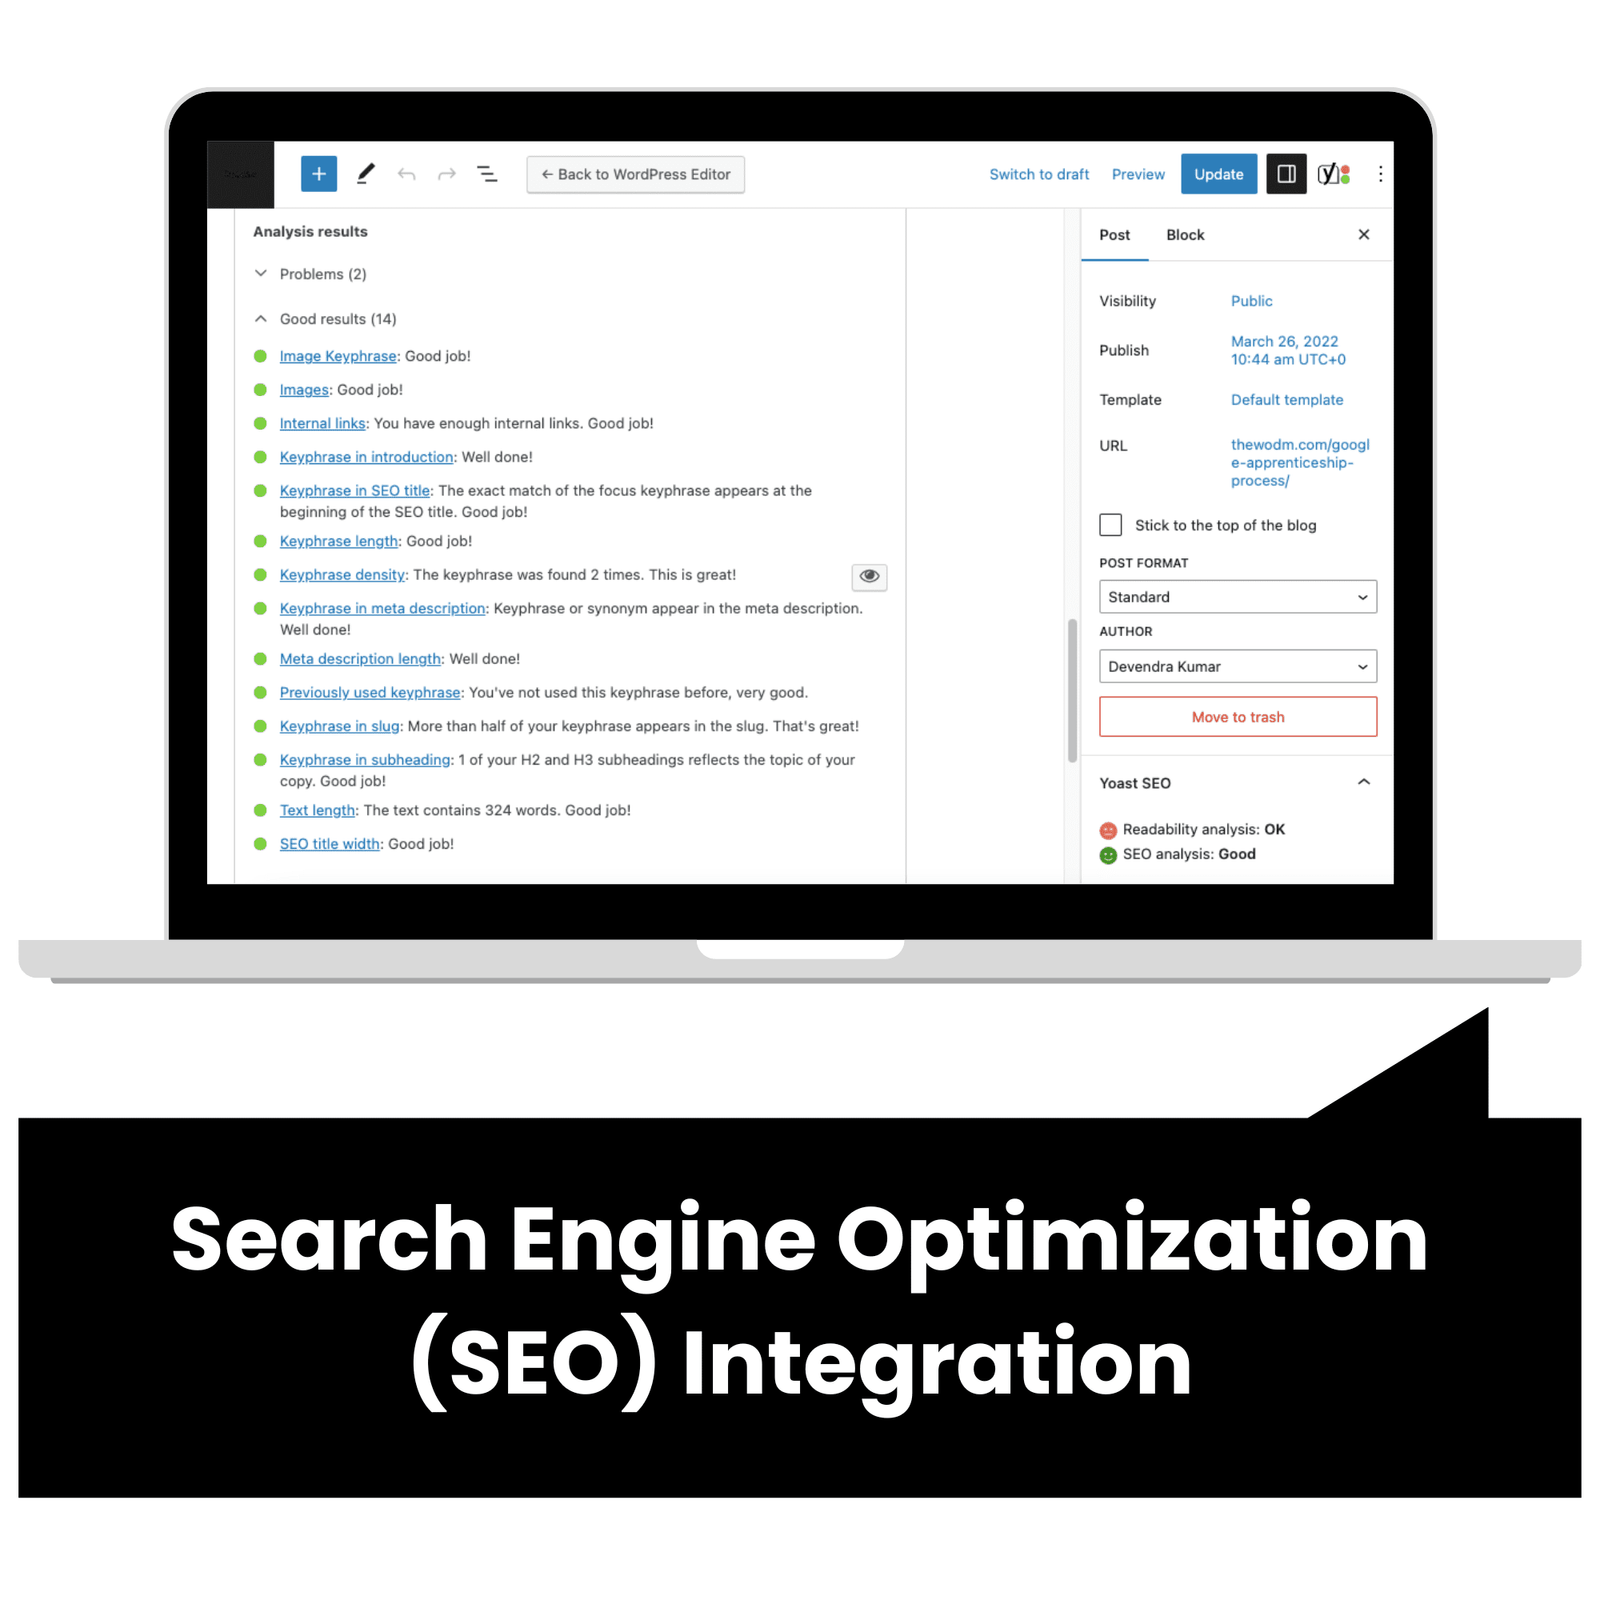 Search Engine Optimization (SEO) Integration